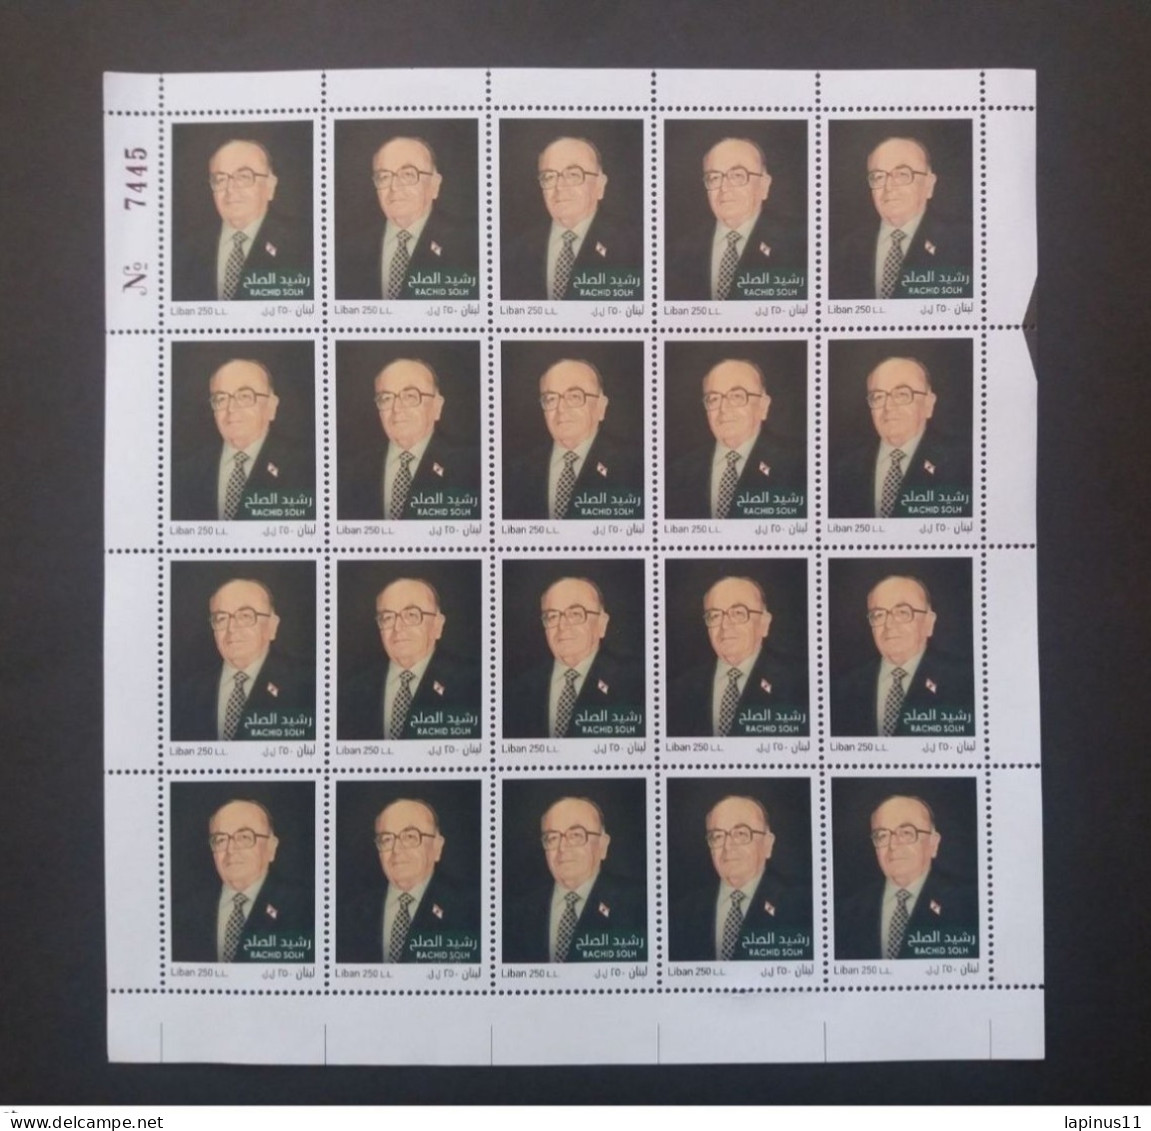 LIBAN لبنان LEBANON 2018 Rachid Solh, 1926-2014 Stamps Full Sheet MNH - Libanon